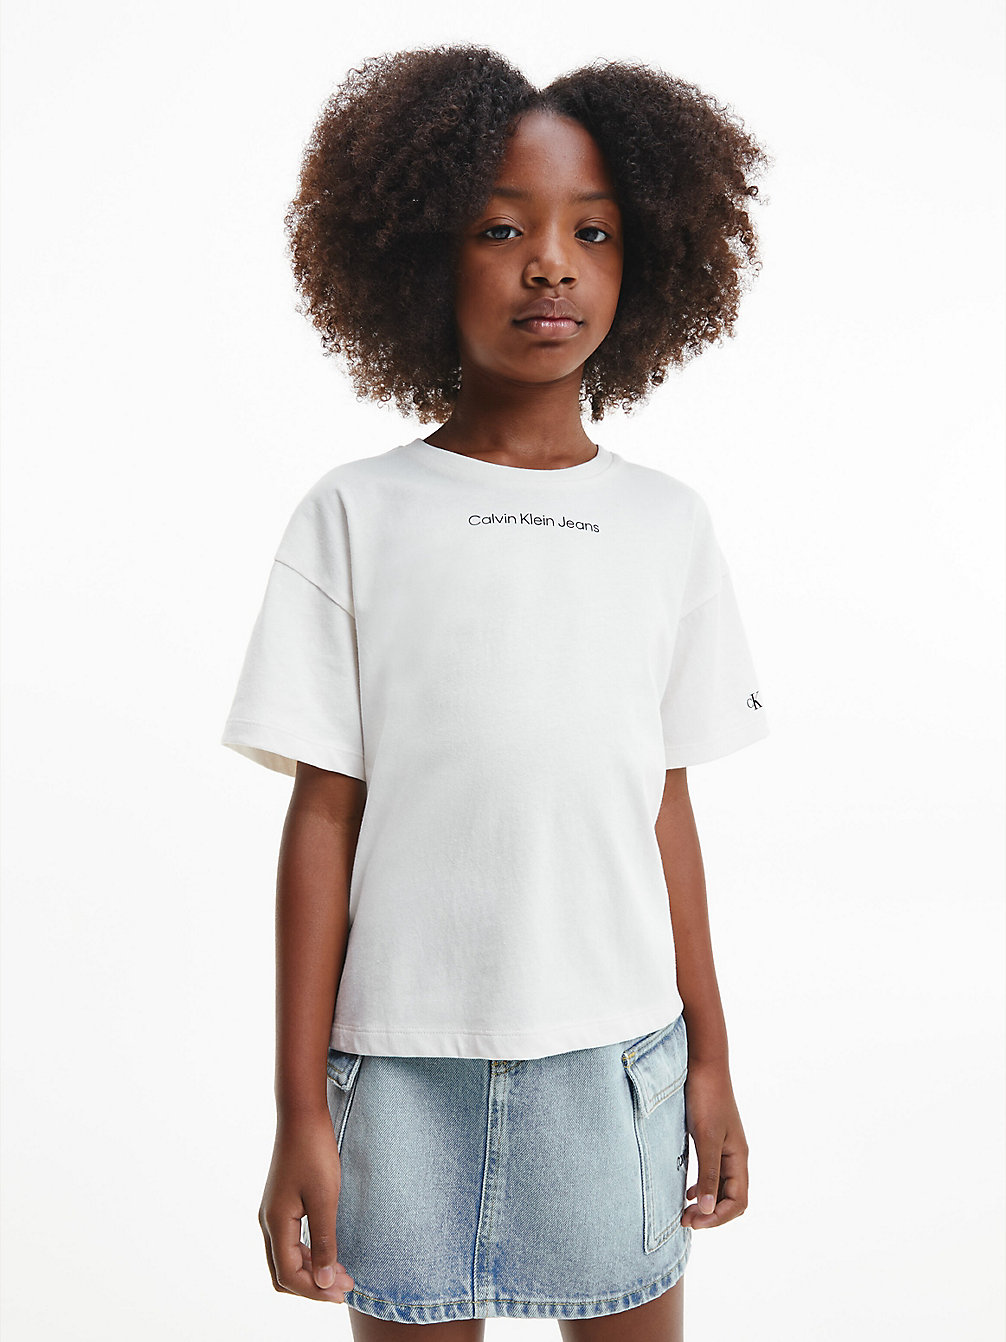 IVORY > Свободная футболка из органического хлопка > undefined girls - Calvin Klein